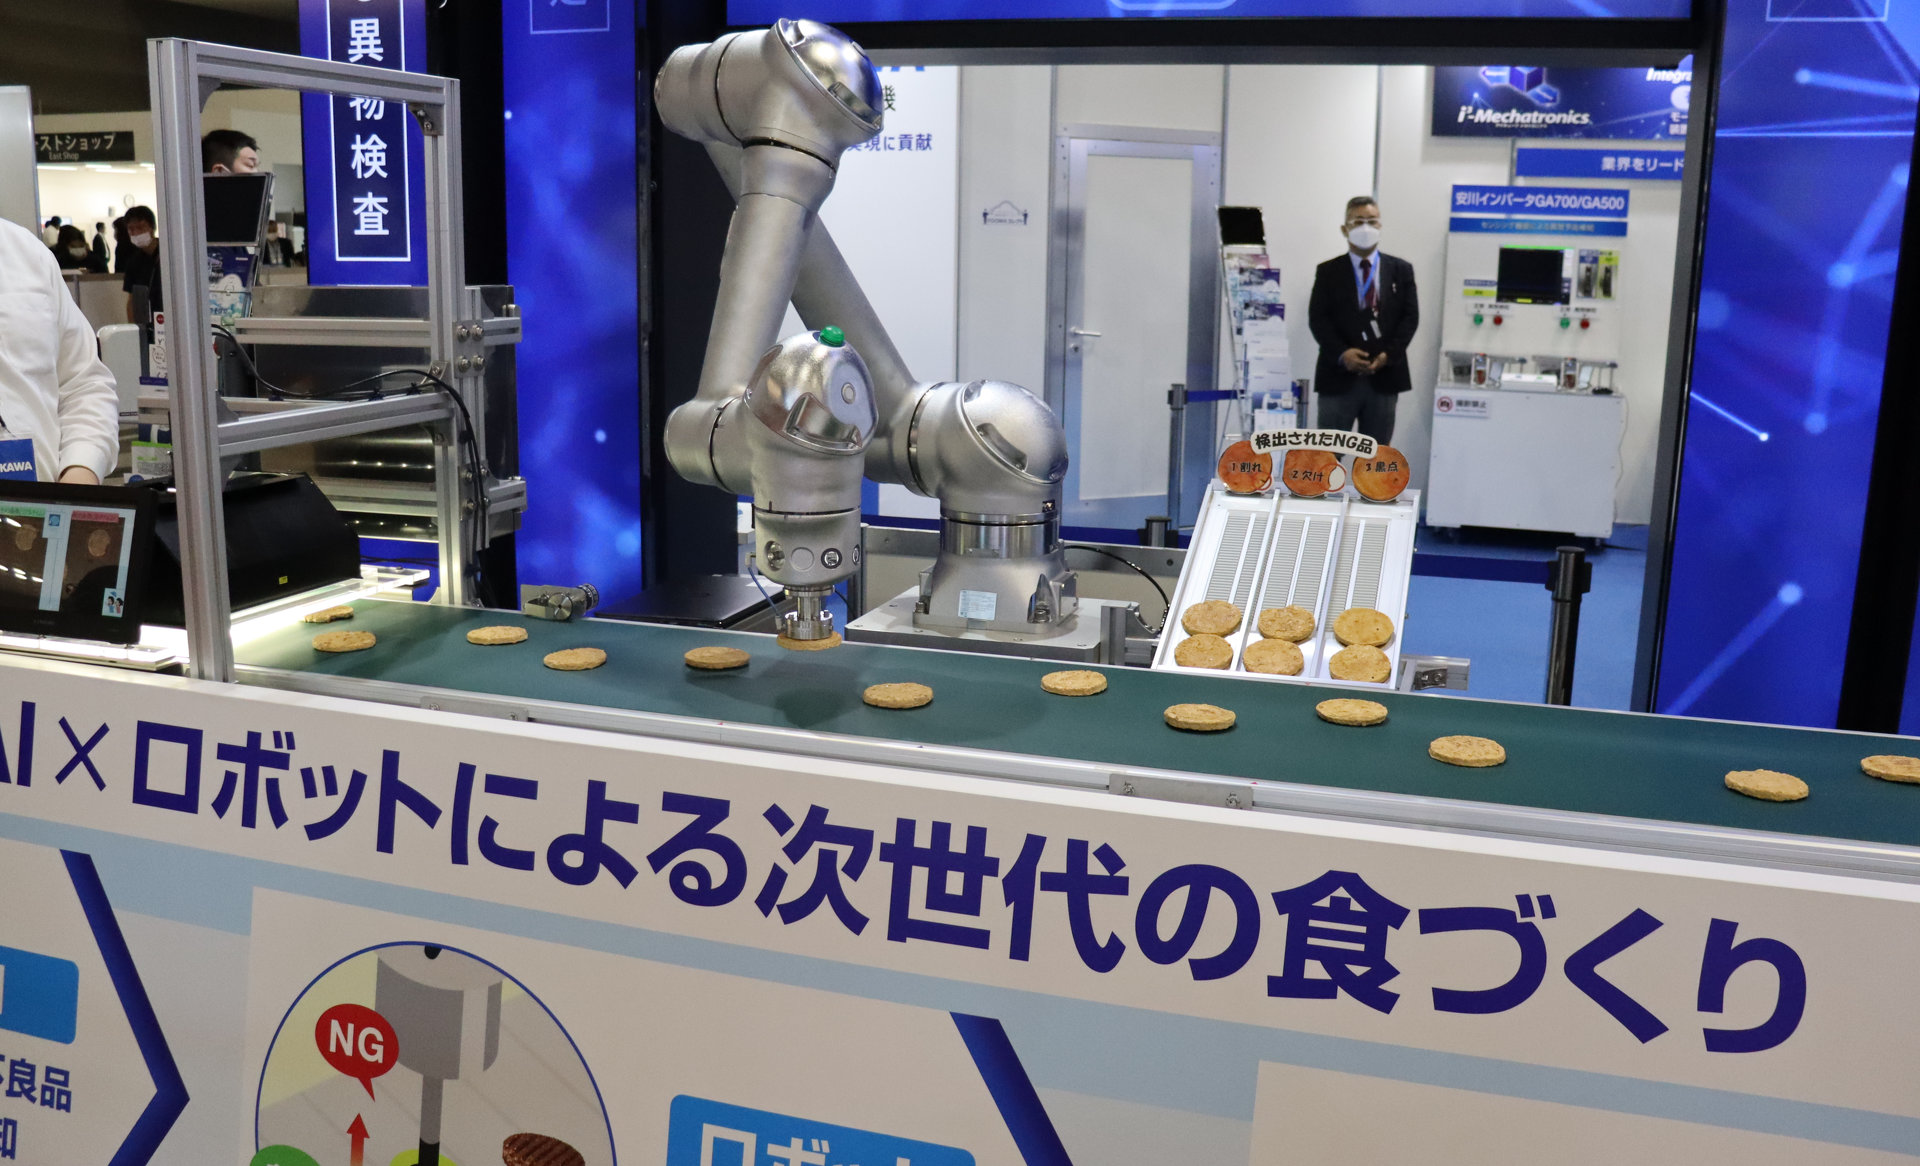 AIを用いた異物検査を食品製造に適用、新型自律ロボットでは新たな市場目指す